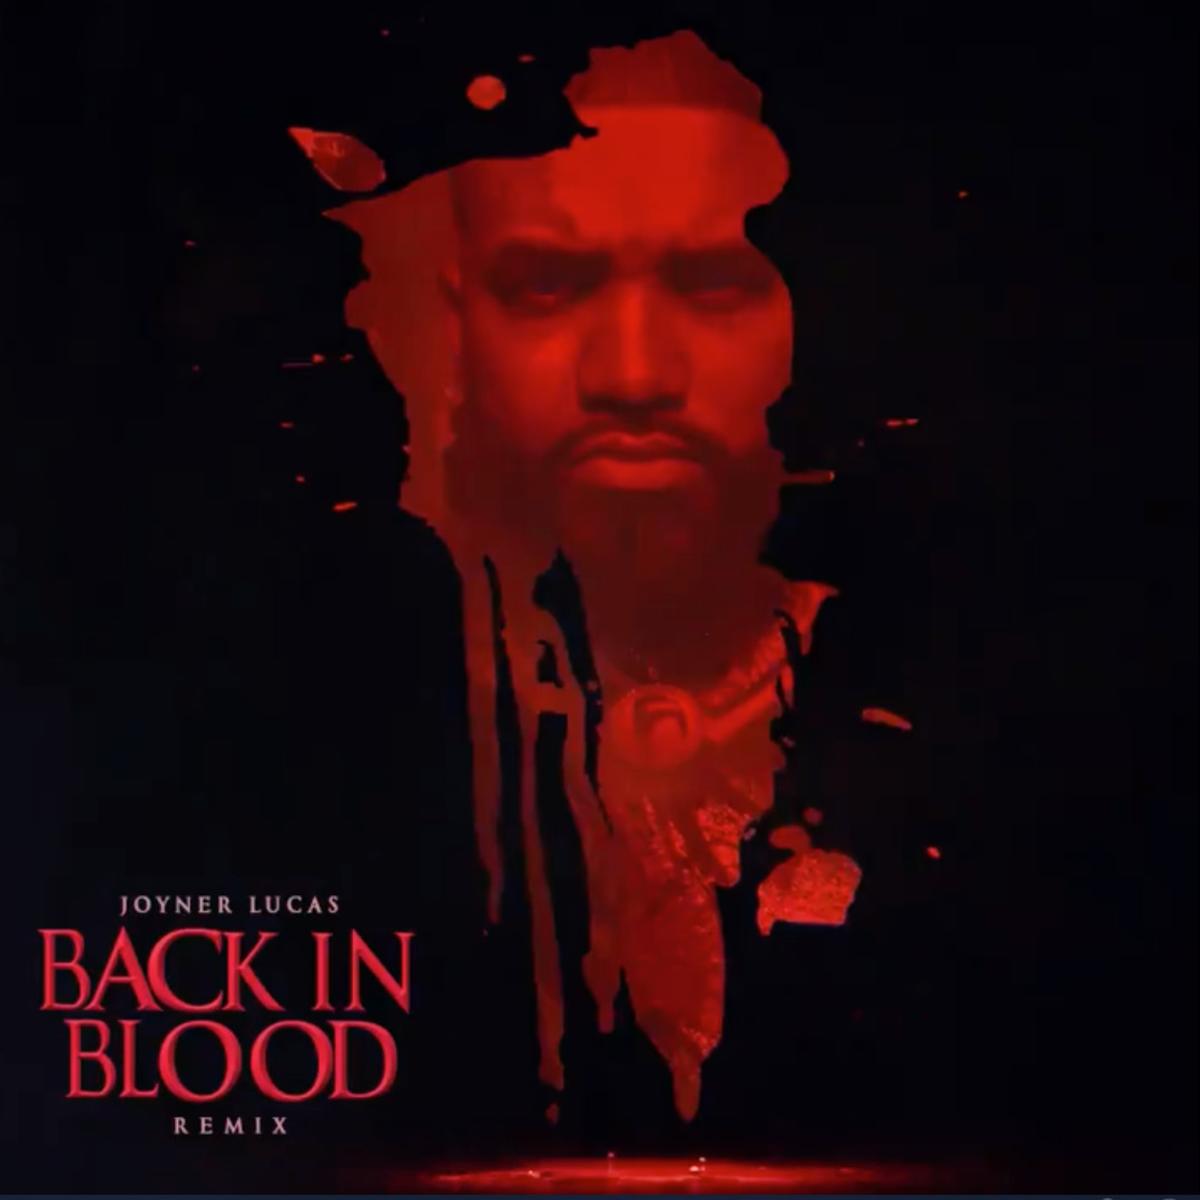 Joyner Lucas – “Back In Blood Remix” [Remix]